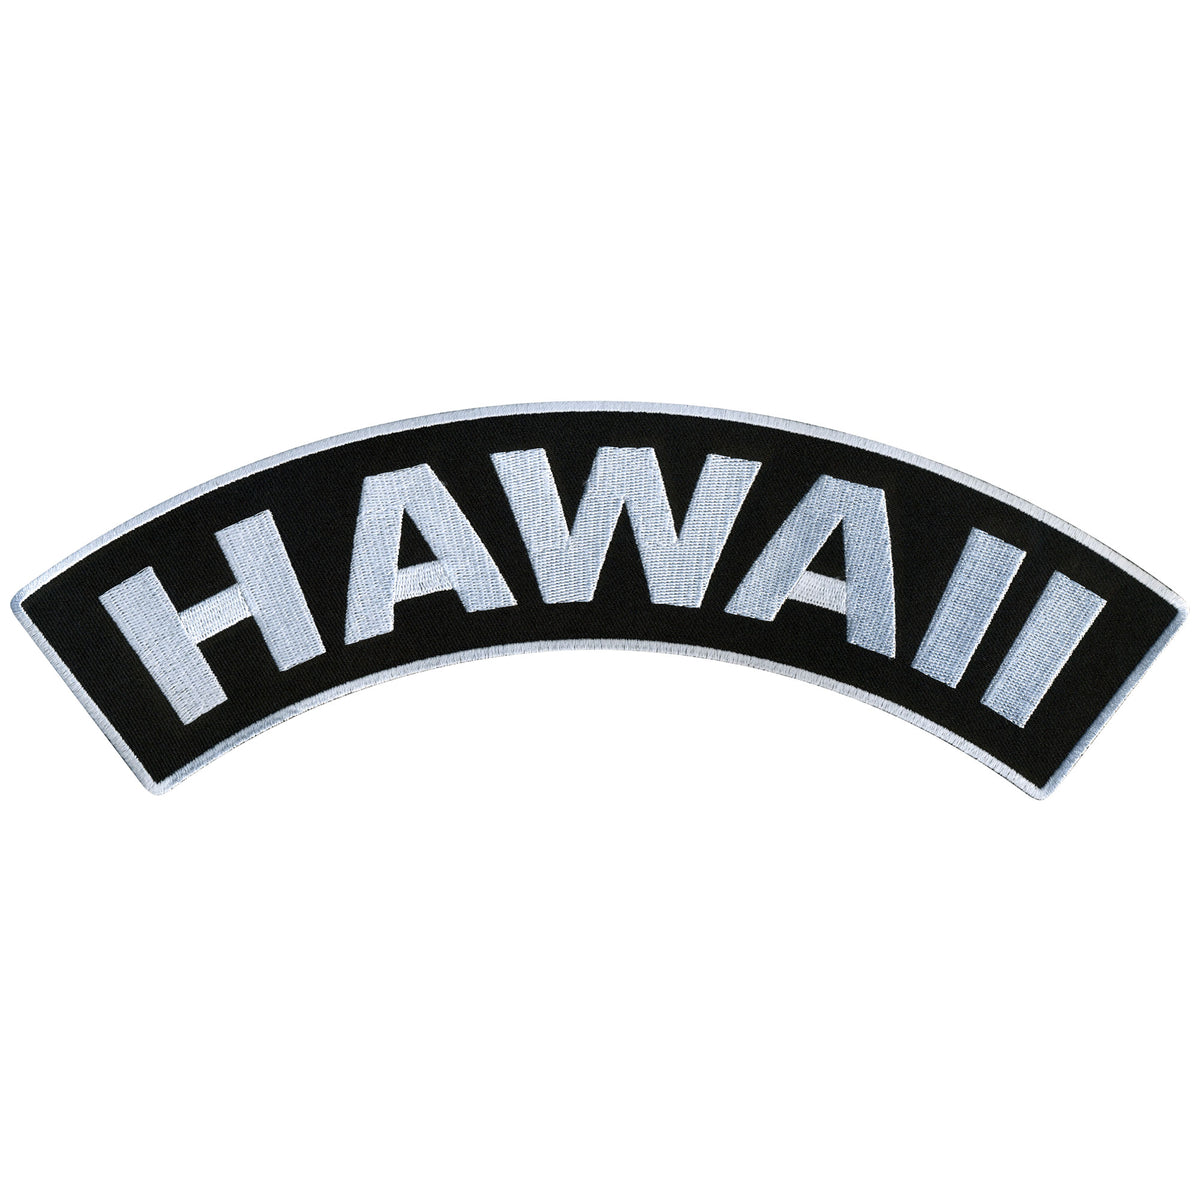 Hot Leathers Hawaii 12” X 3” Top Rocker Patch